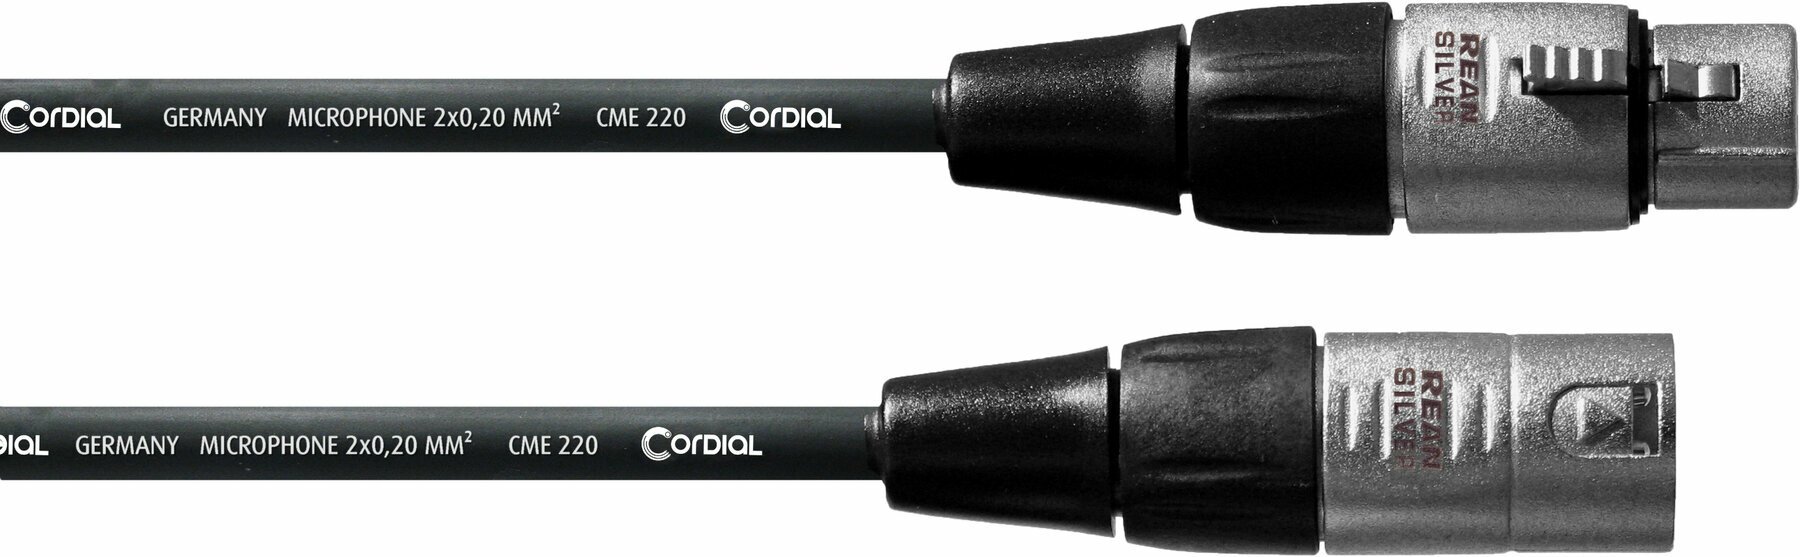 Cable de micrófono Cordial CFM 1,5 FM Negro 1,5 m Cable de micrófono